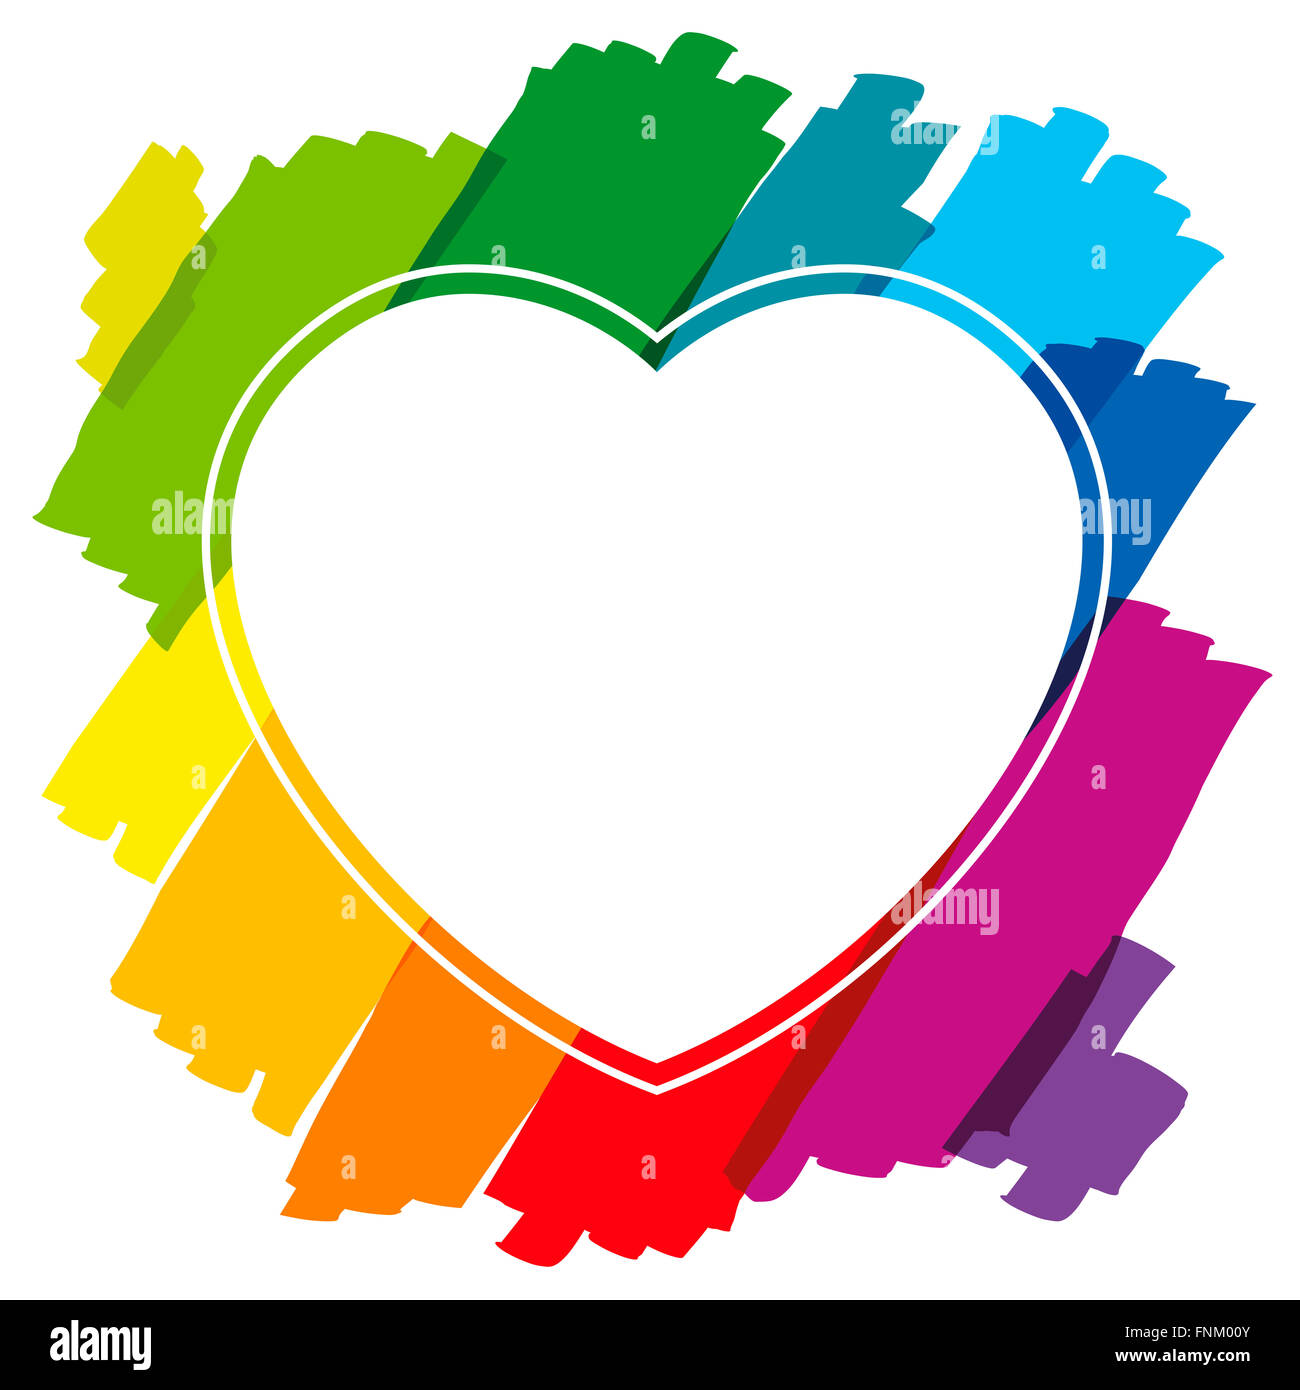 Heart shaped frame made of colorful brush strokes. Illustration on white background. Stock Photo